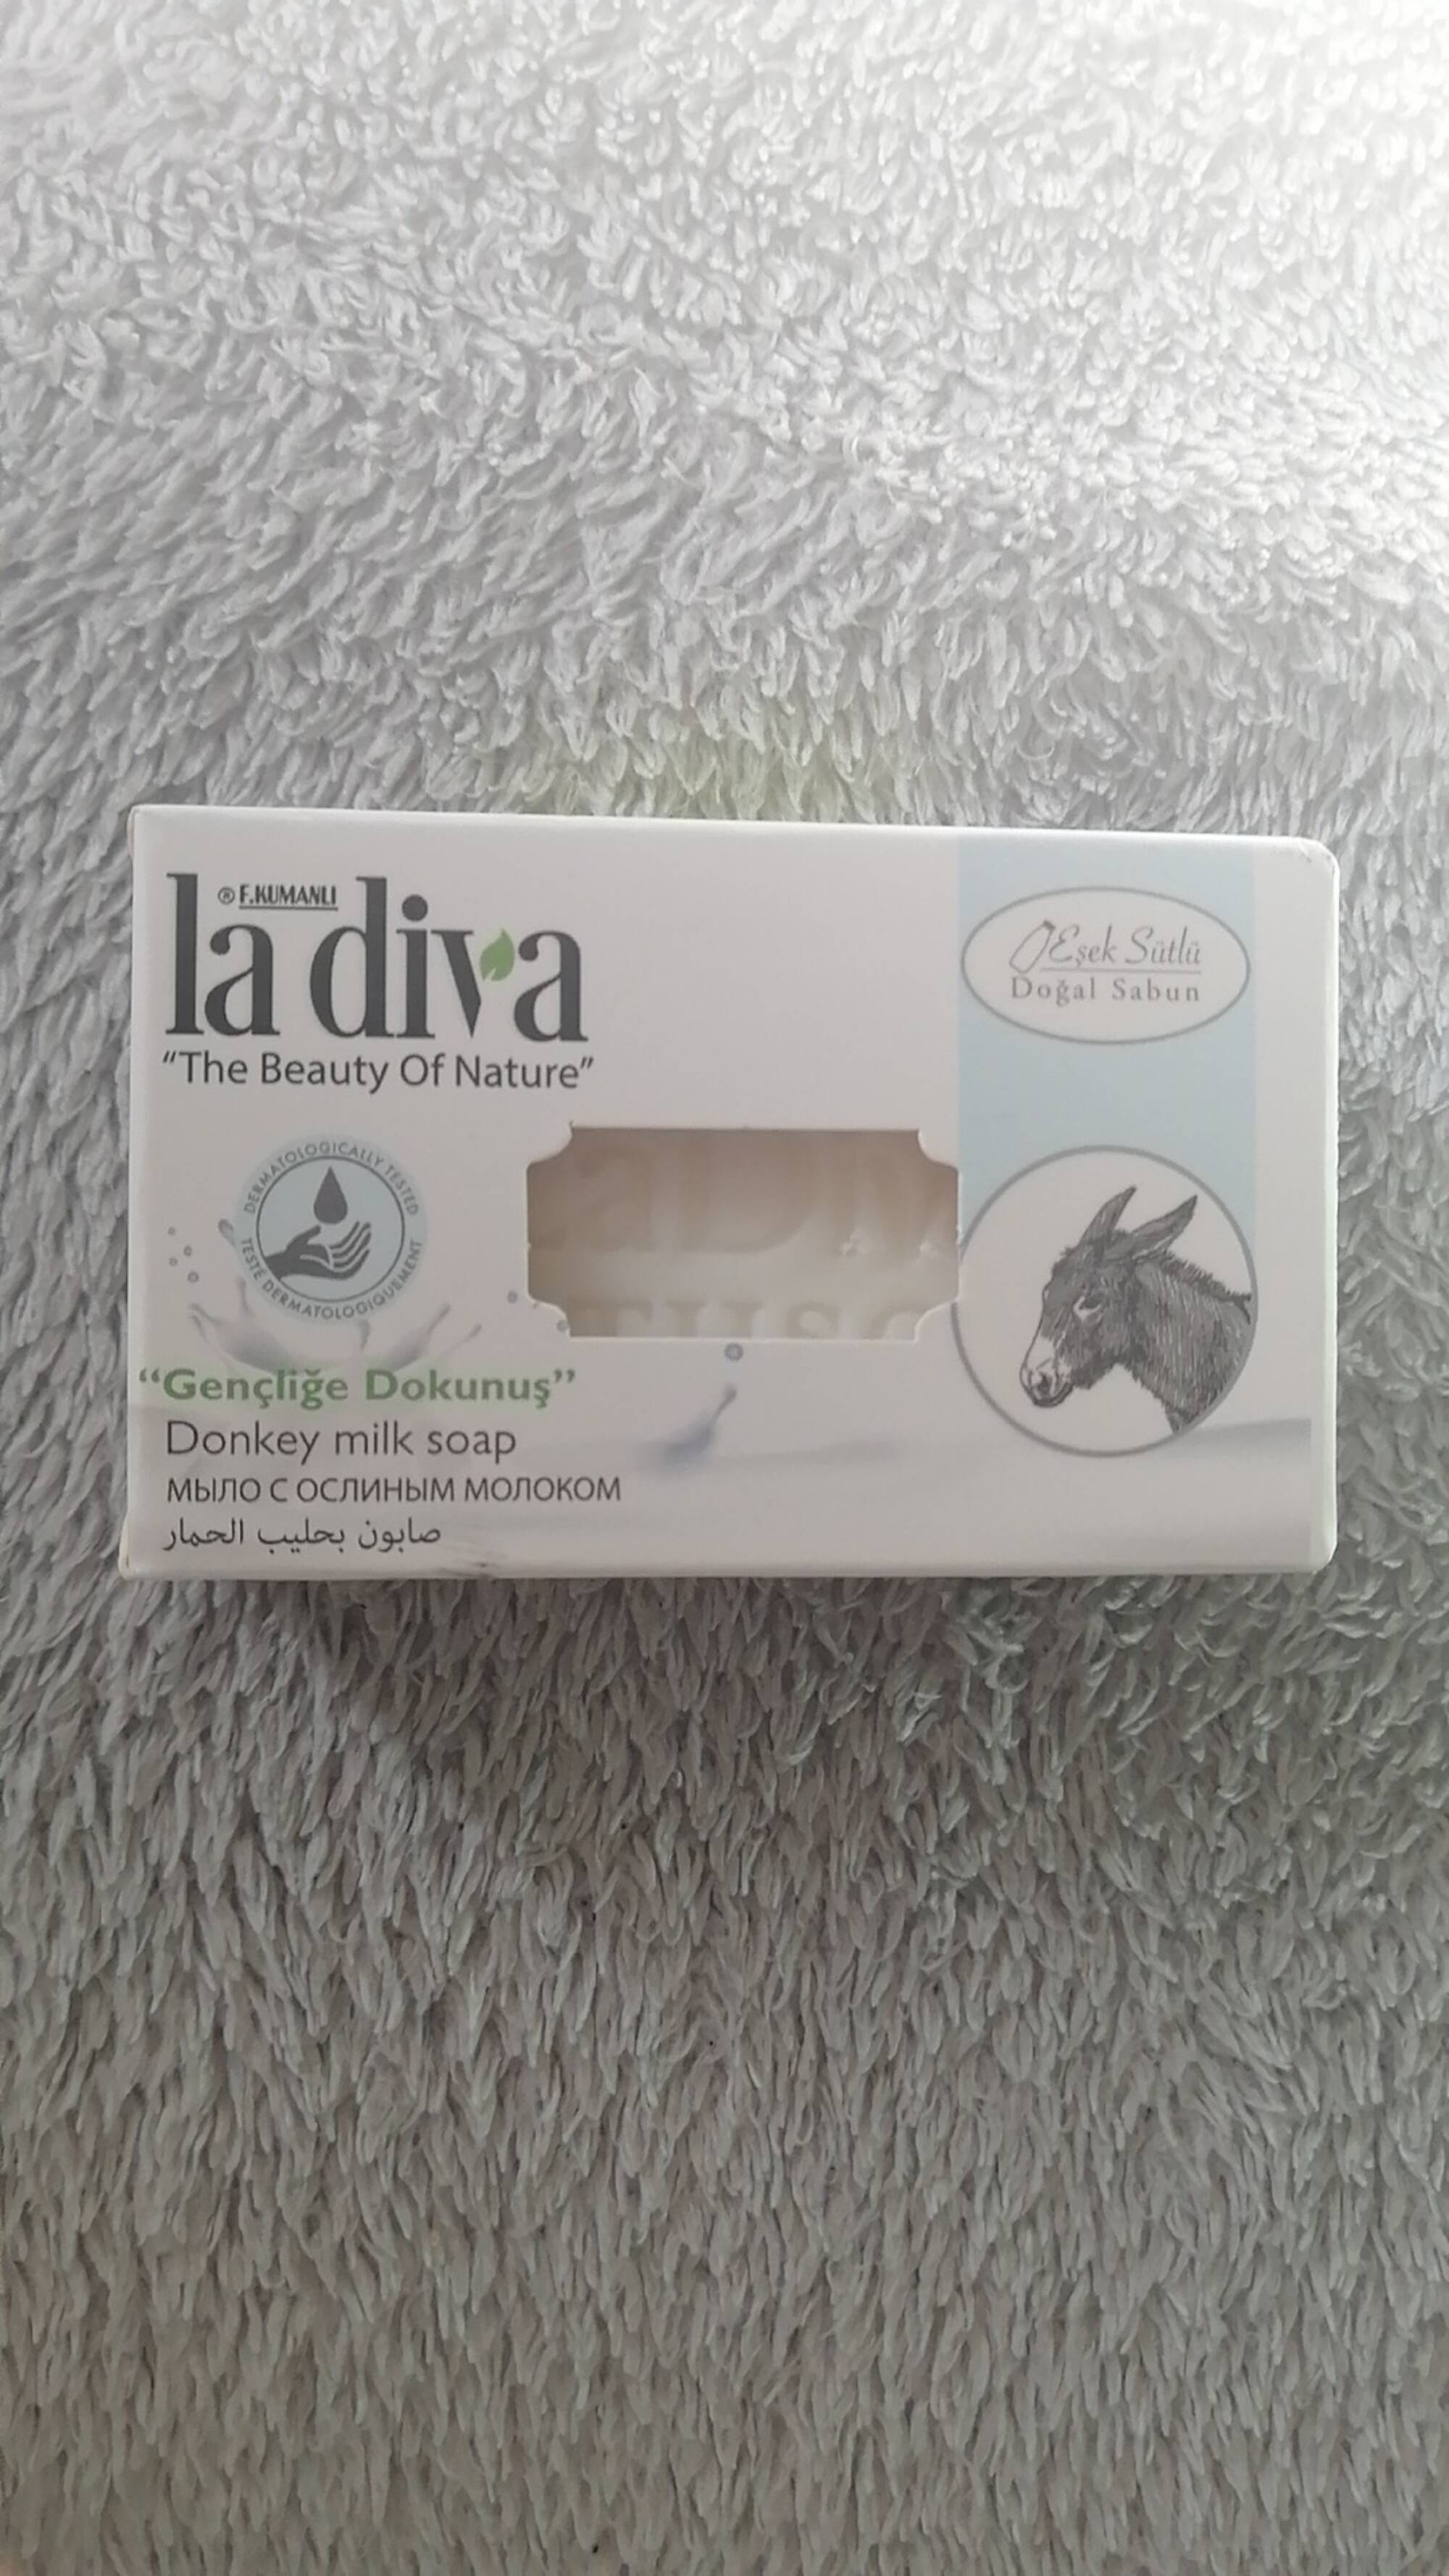 LA DIVA - Donkey milk soap